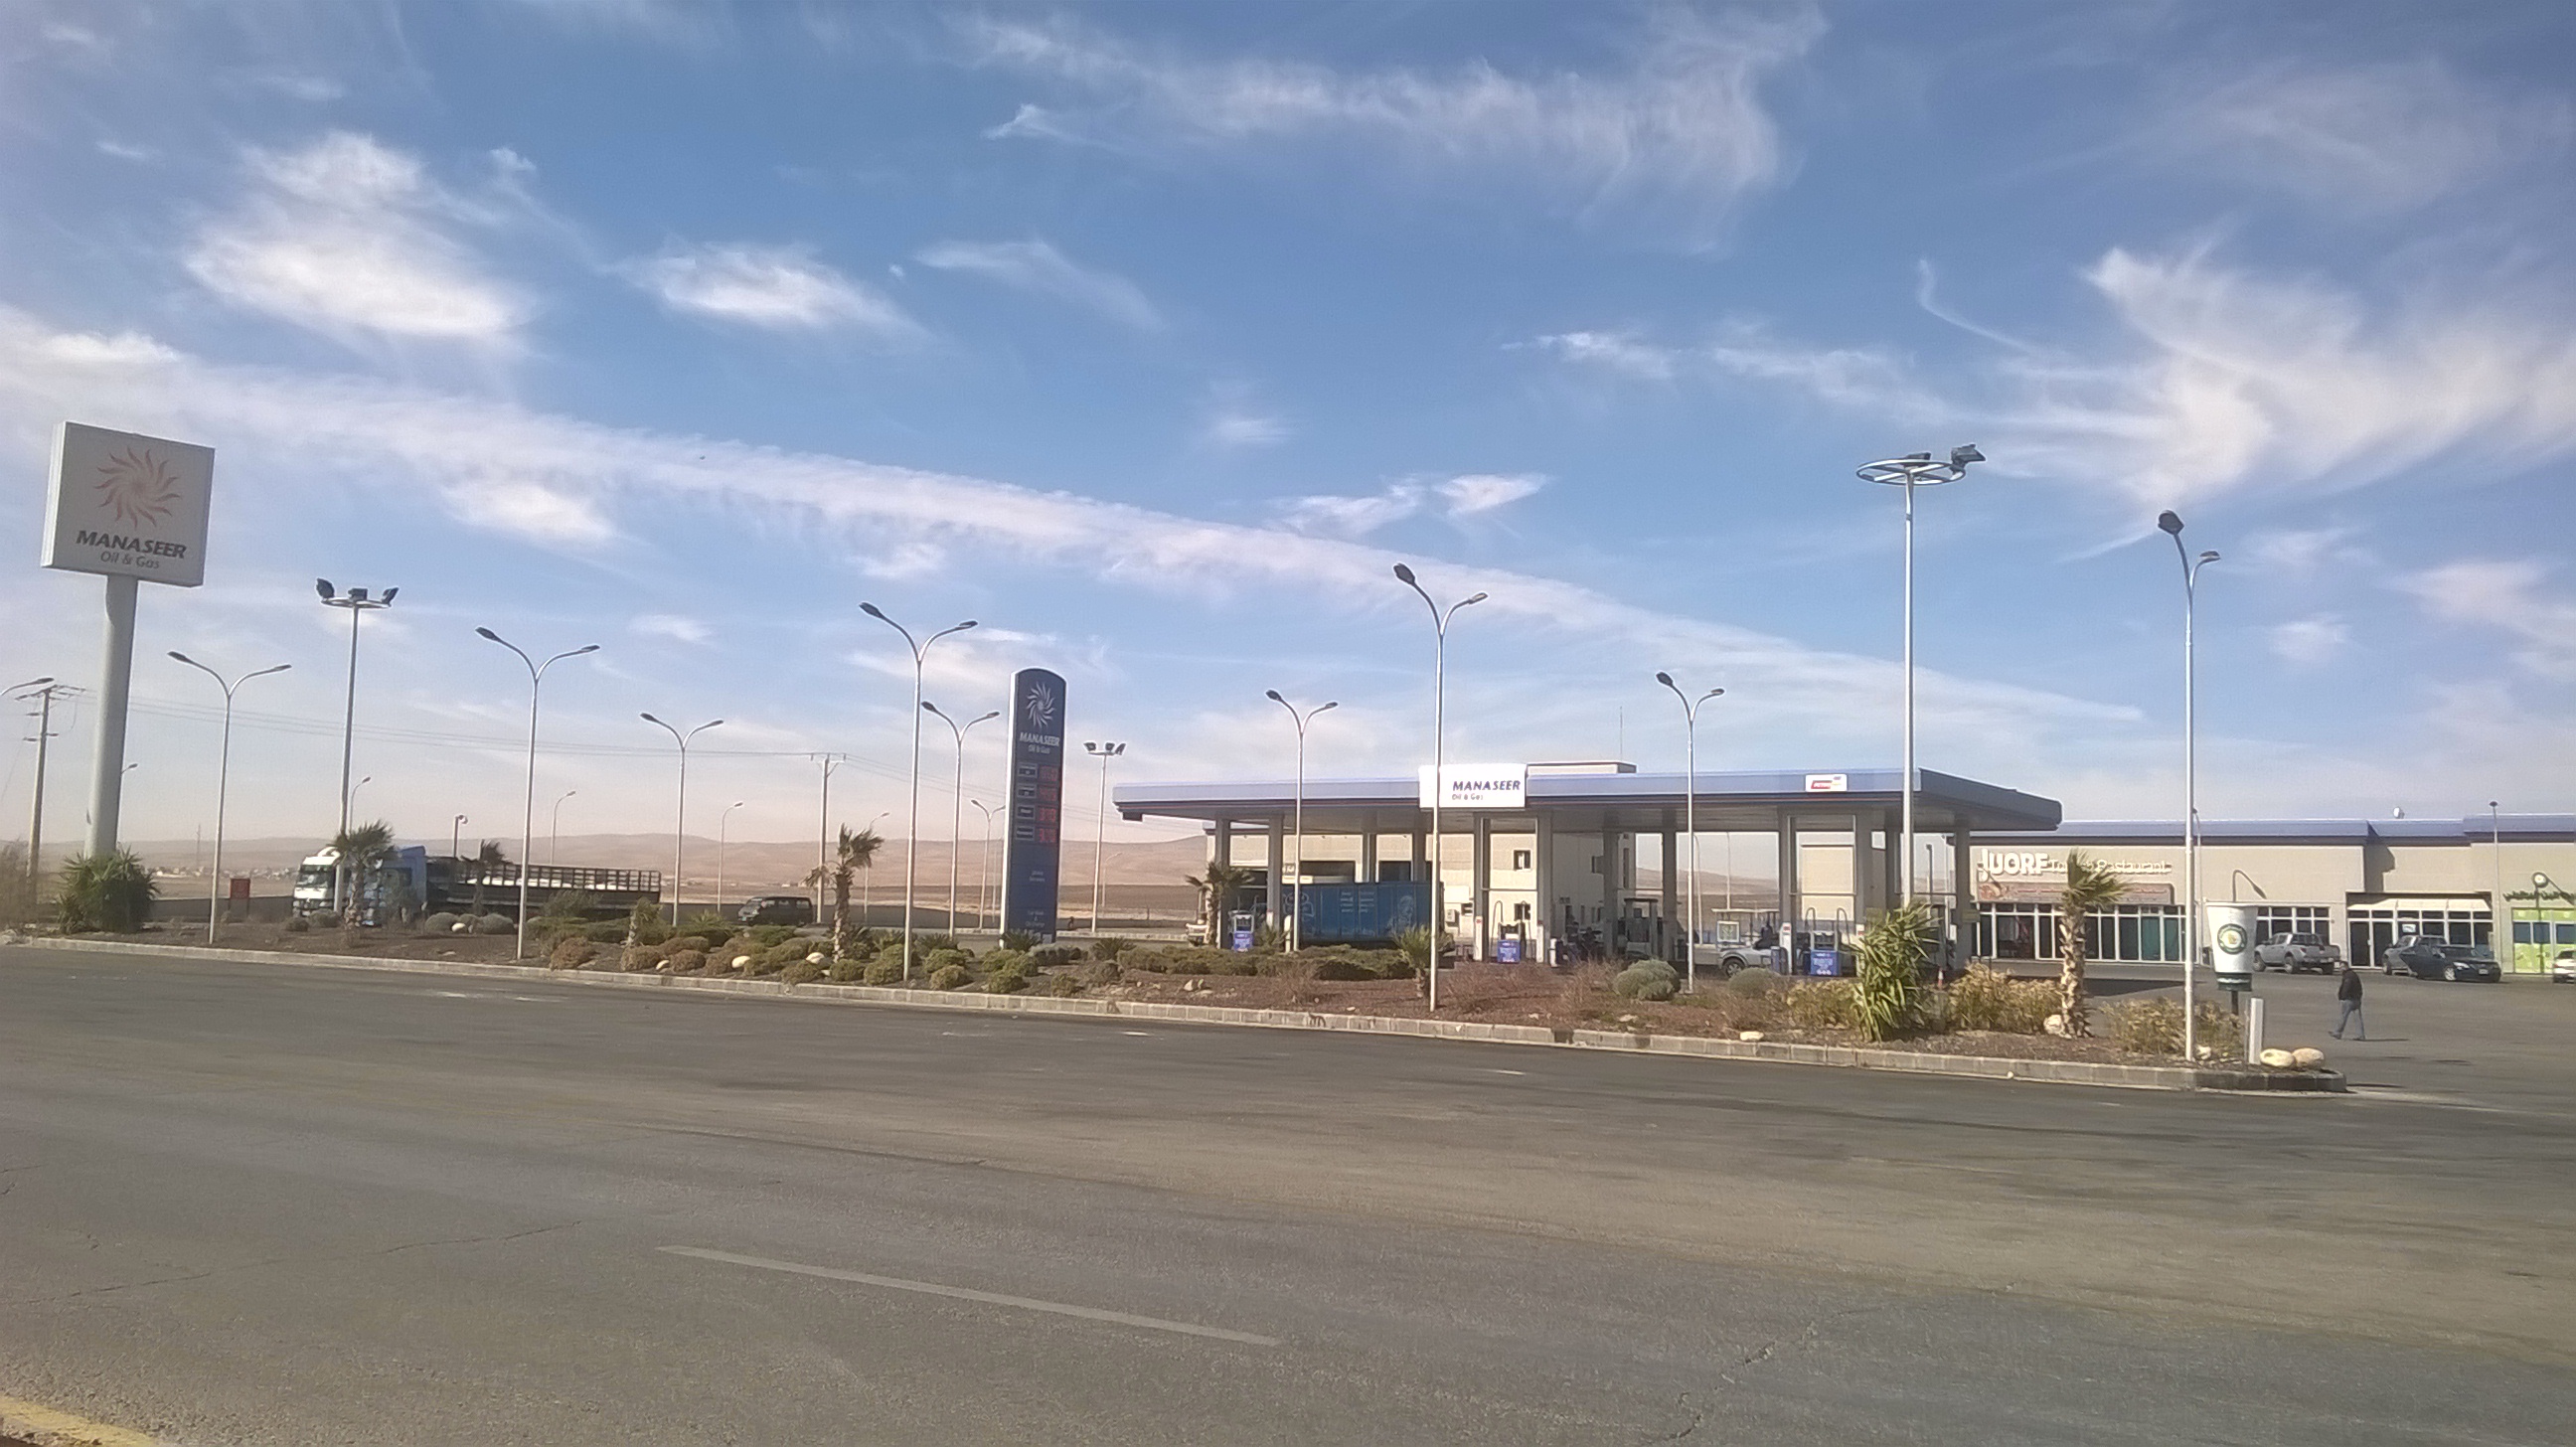 Jurf Al Daraweesh Station